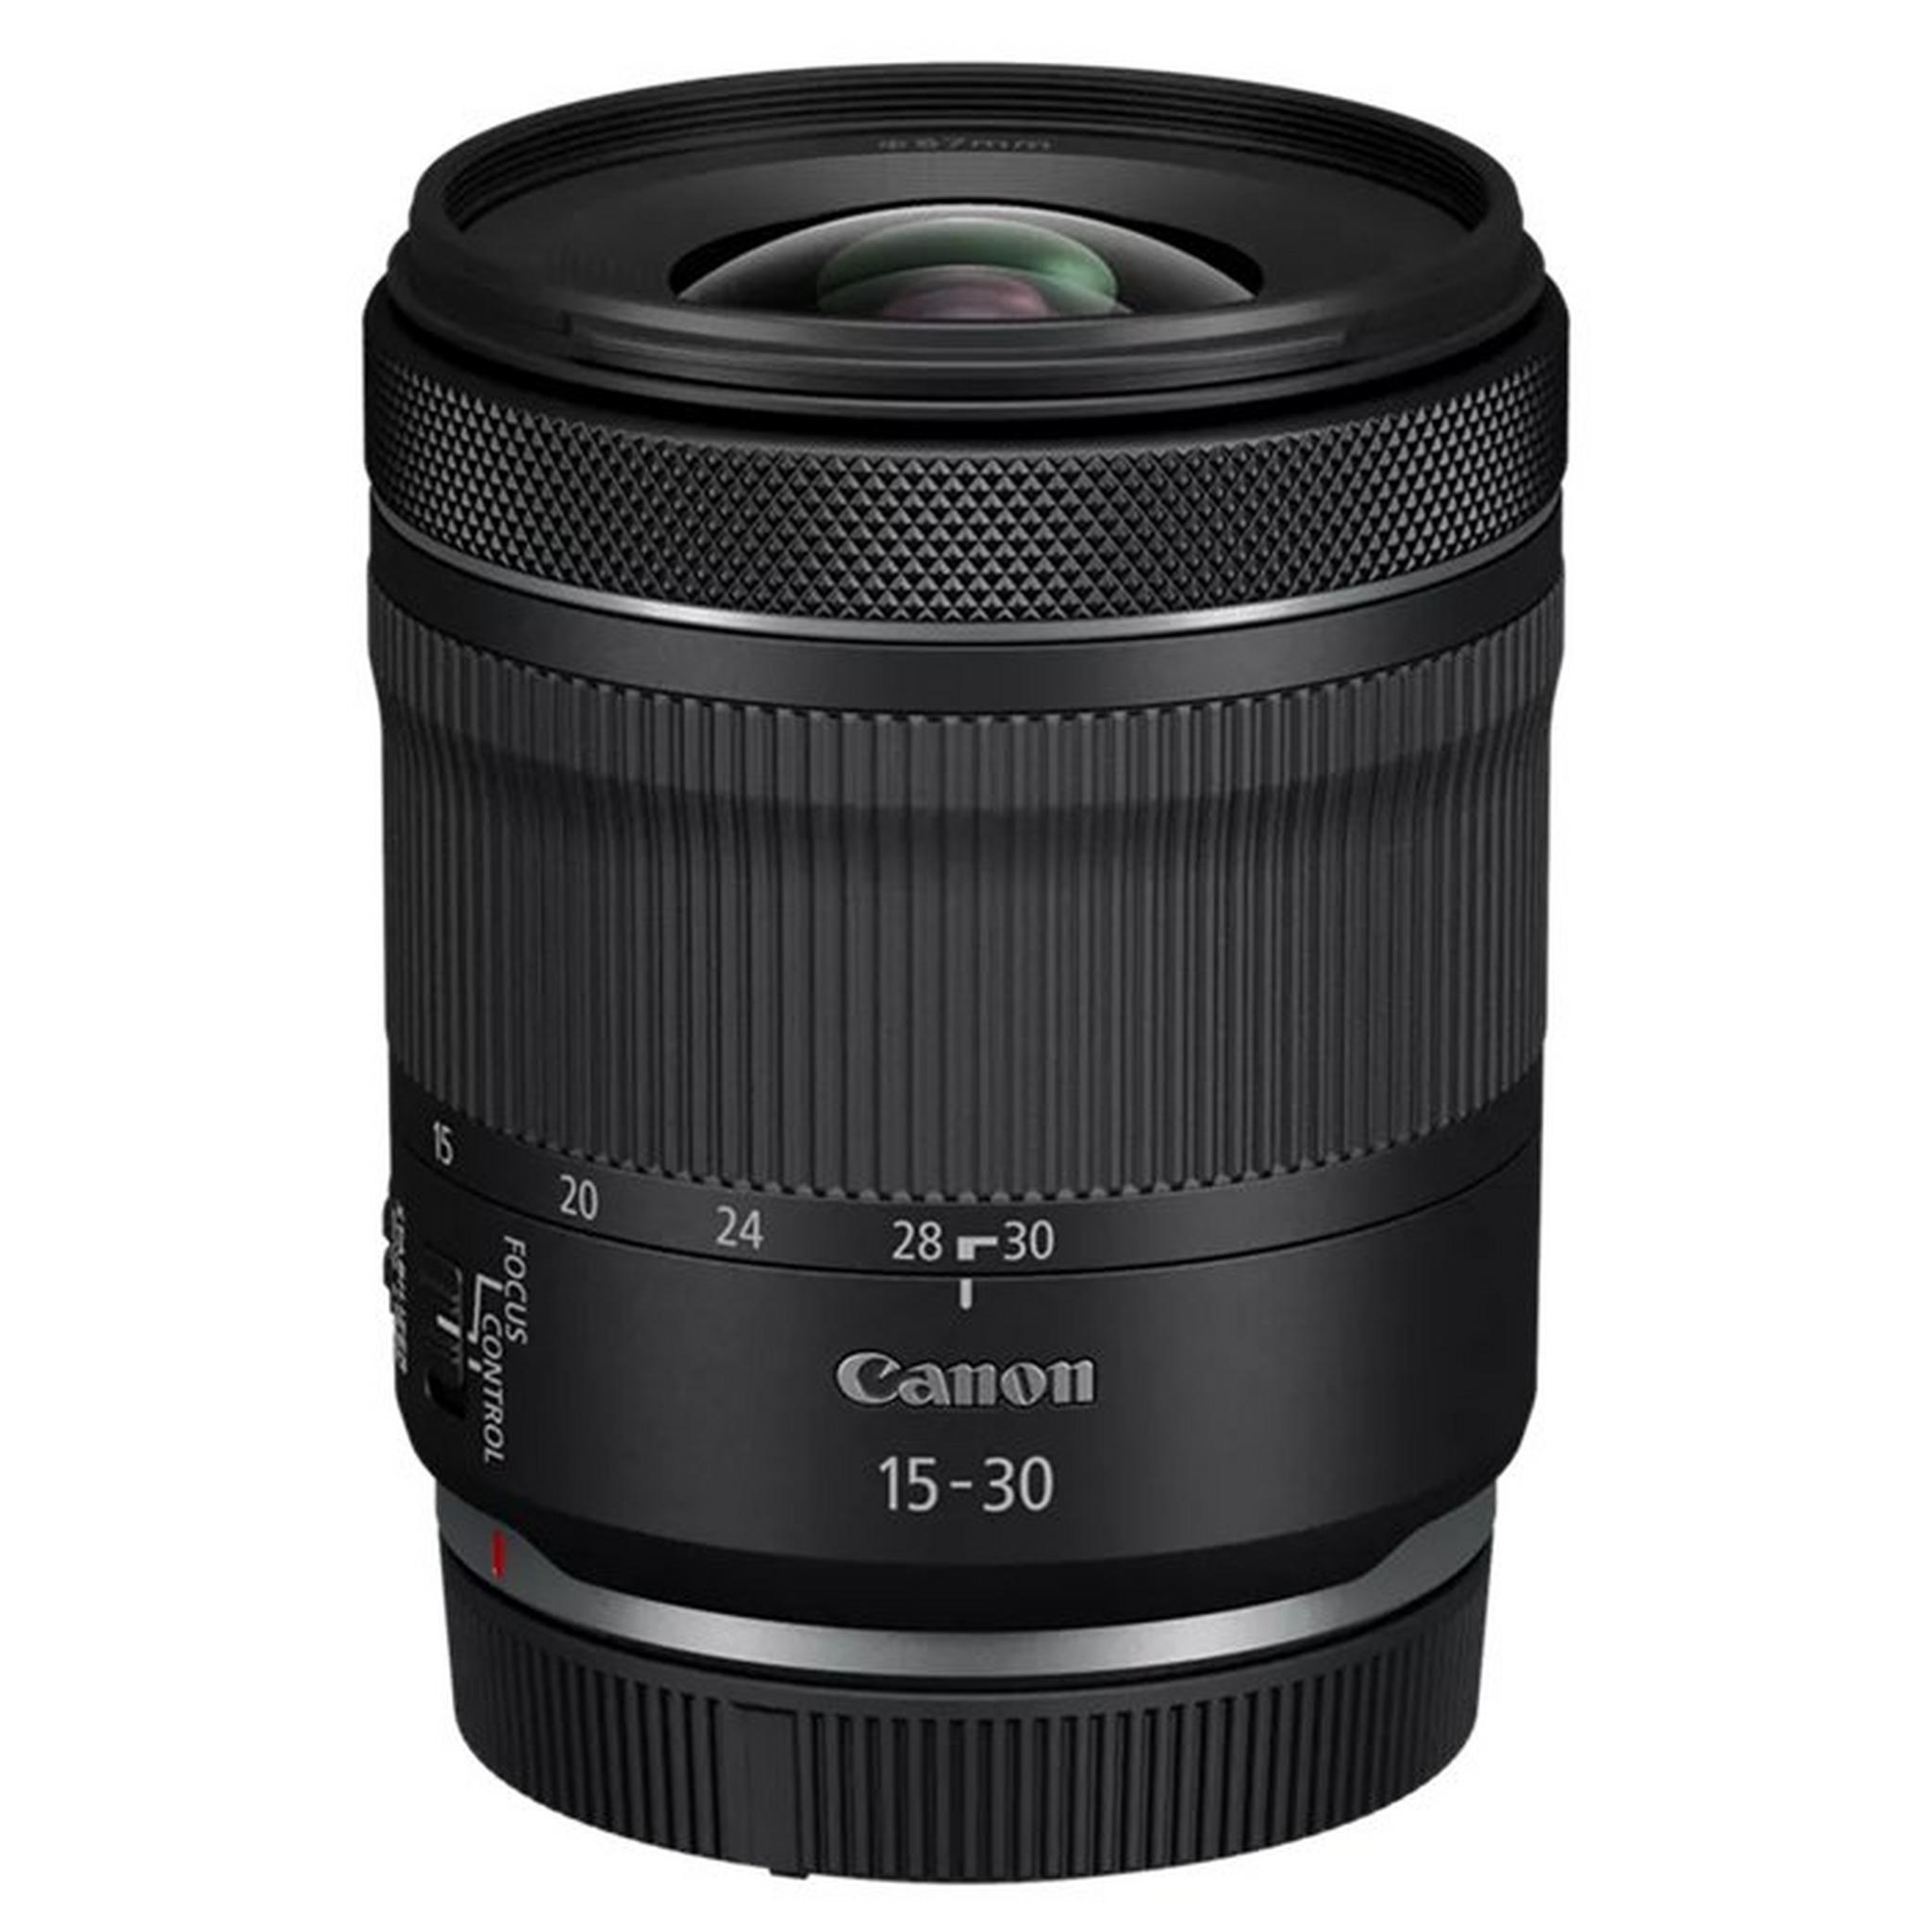 Canon RF 15-30mm Lens, F4.5-6.3 IS STM, 5775C005AA – Black